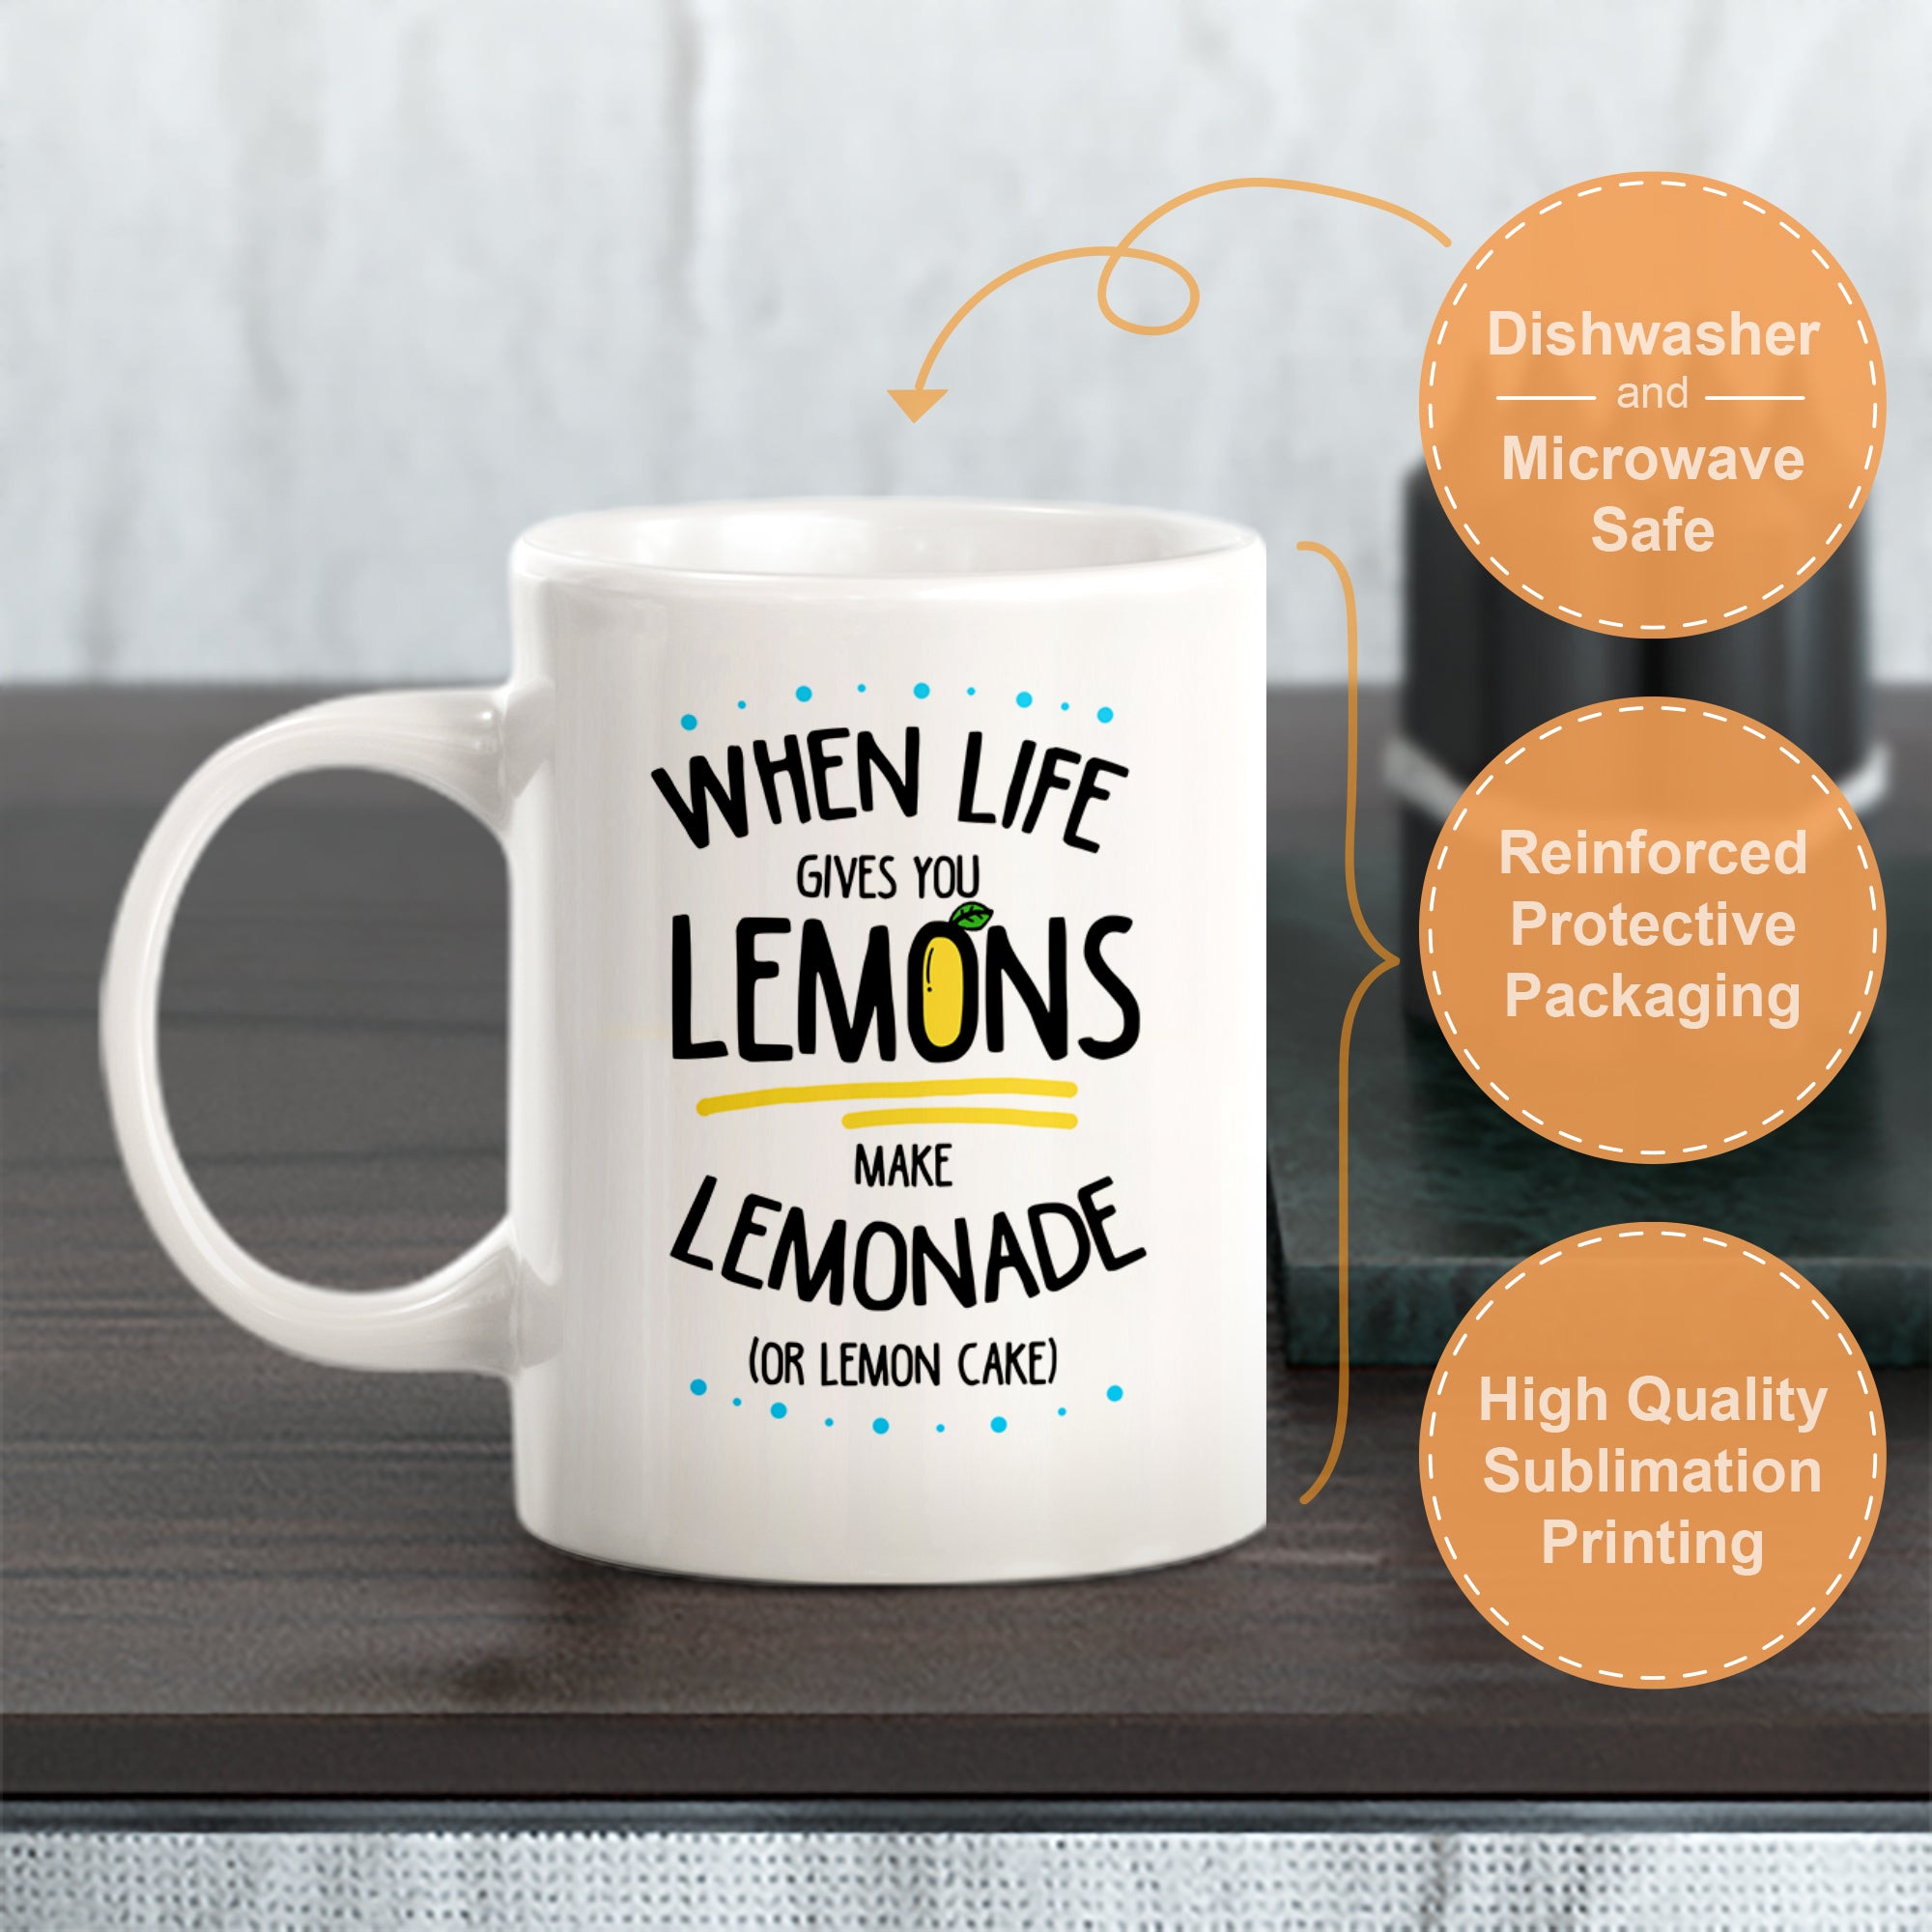 If Life Gives You Lemons. Make Lemonade (Or Lemon Cake) Coffee Mug